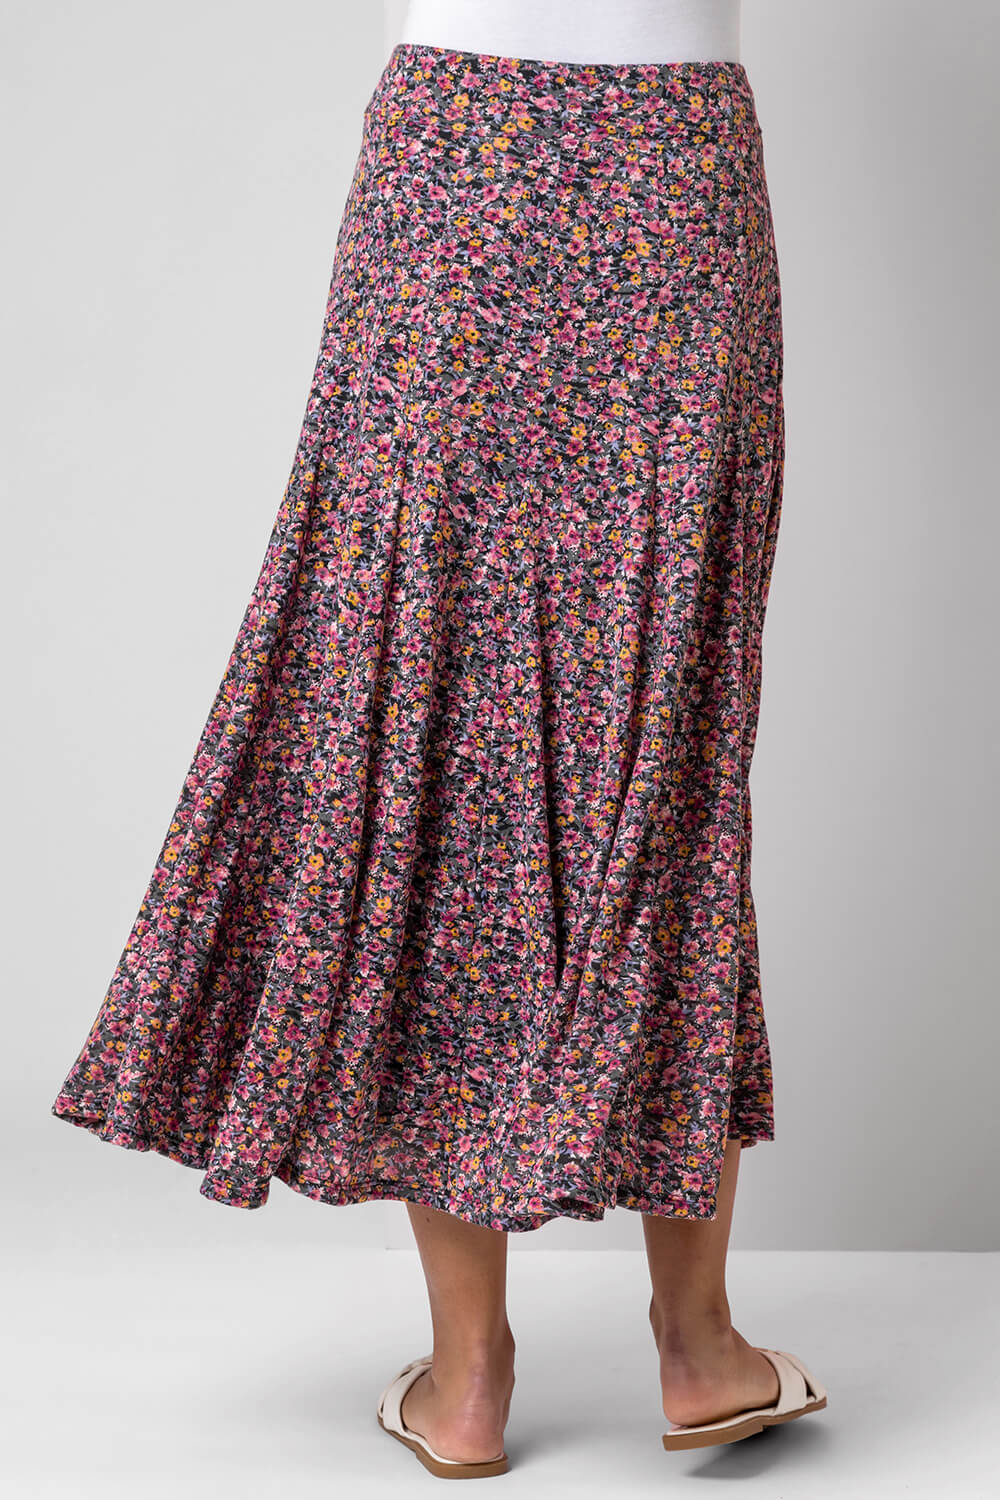 PINK Ditsy Floral Burnout Midi Skirt, Image 3 of 4